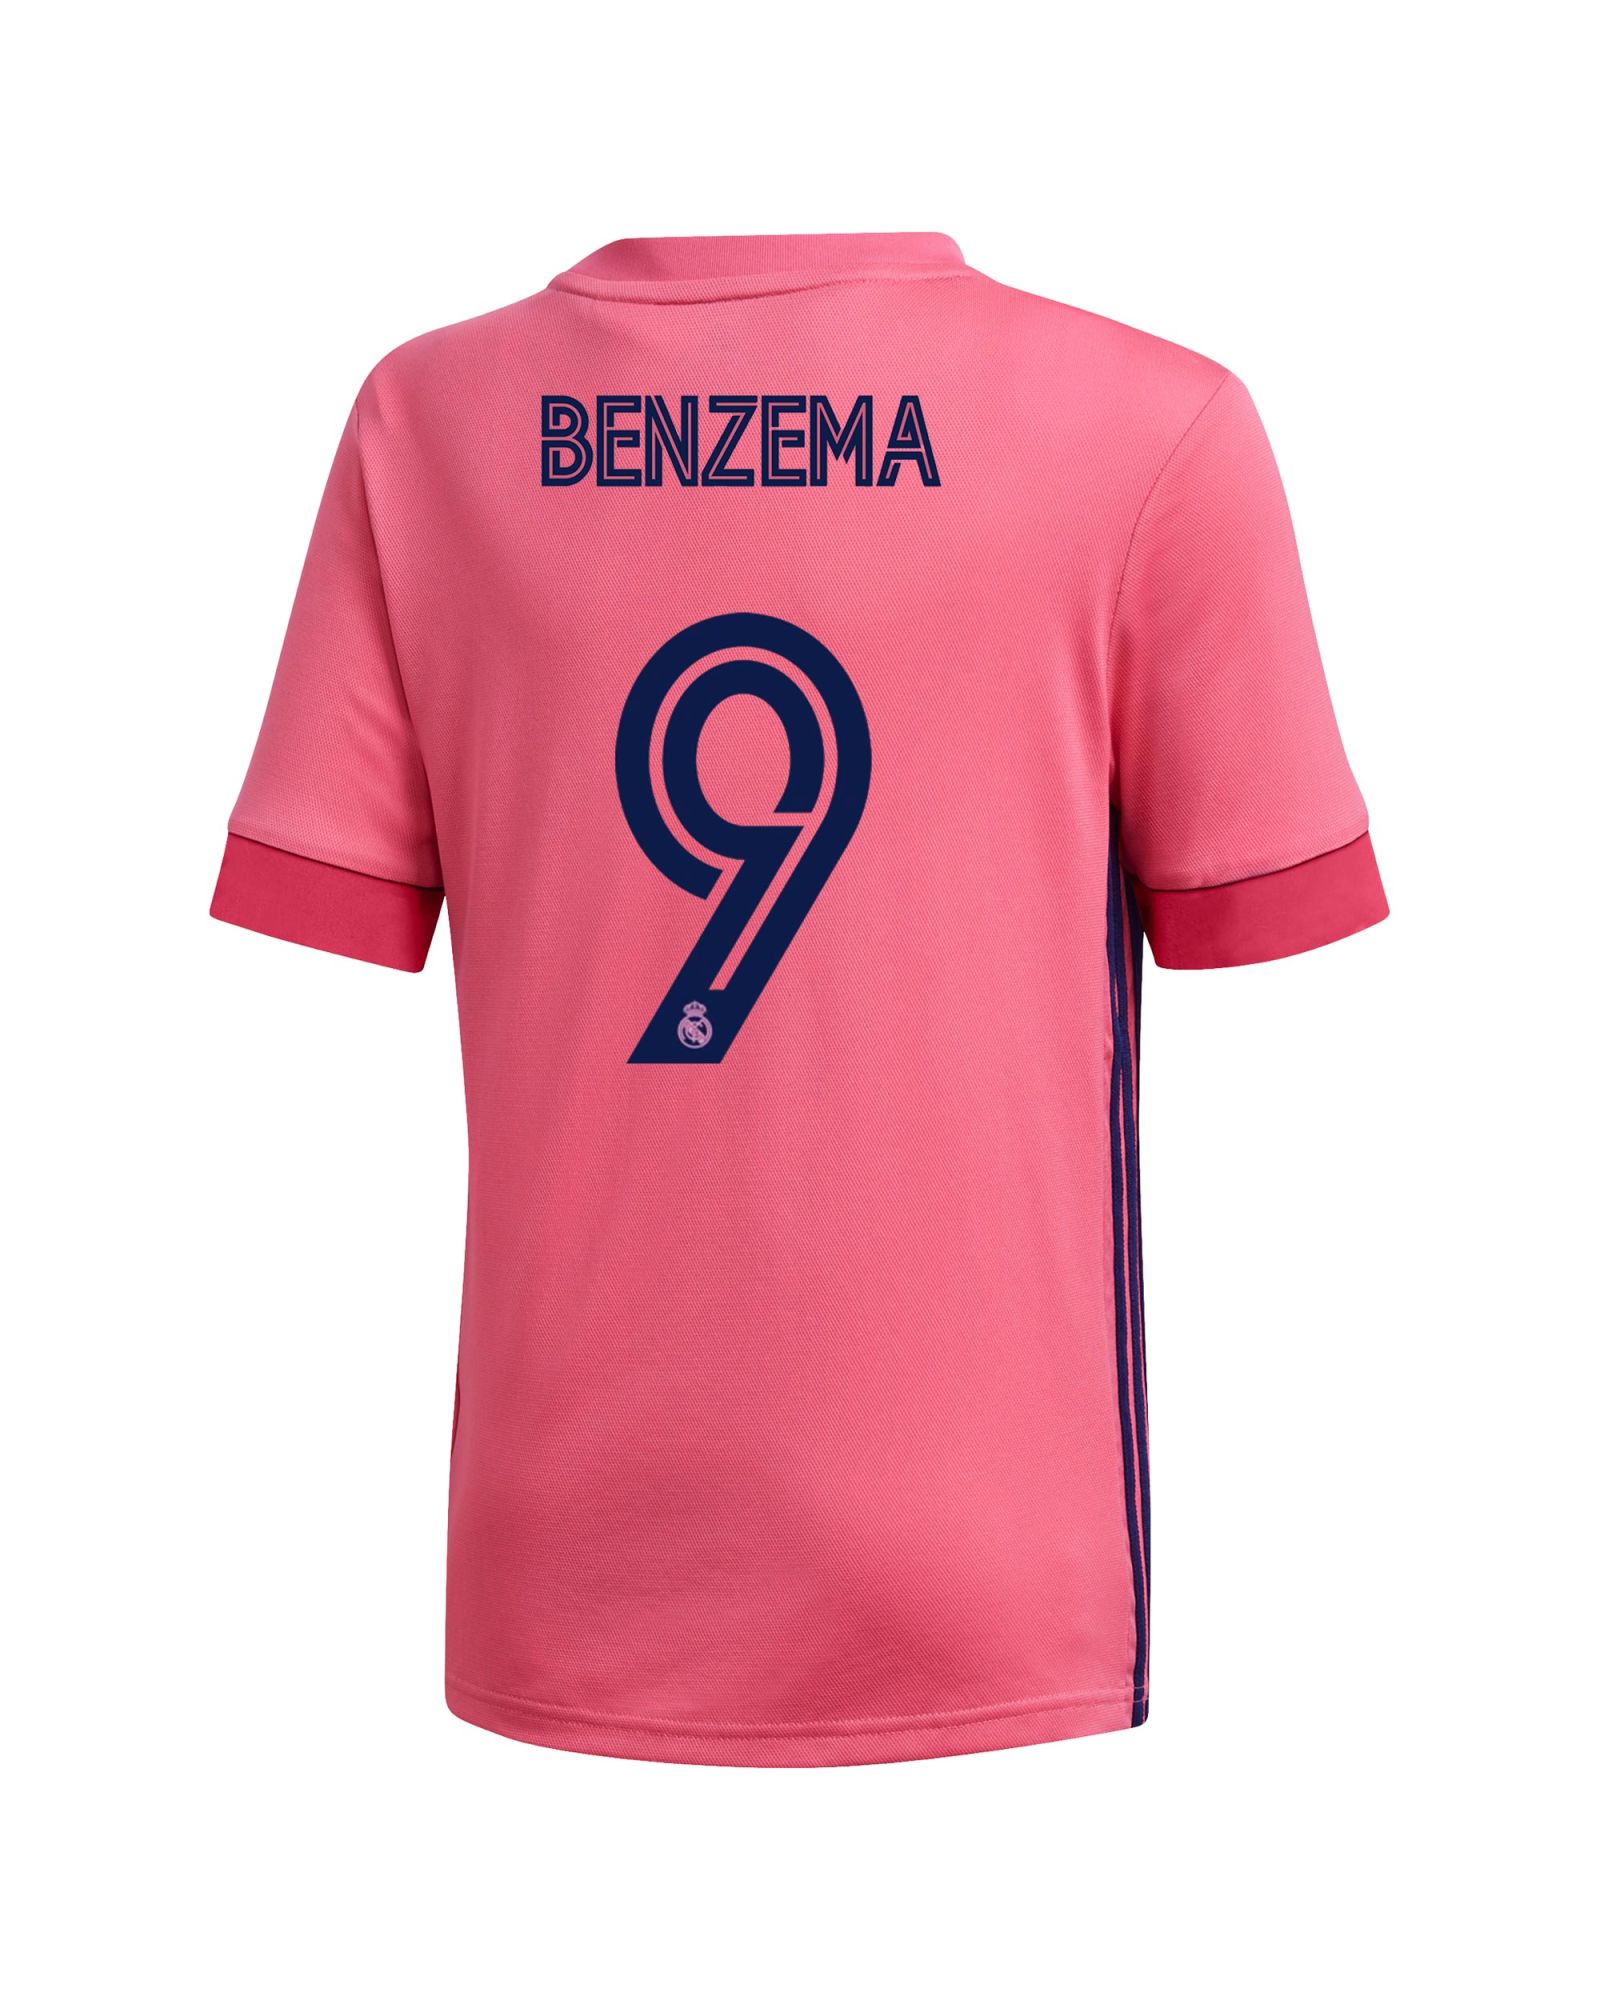 Camiseta 2ª Real Madrid 2020/2021Junior Rosa Benzema - Fútbol Factory